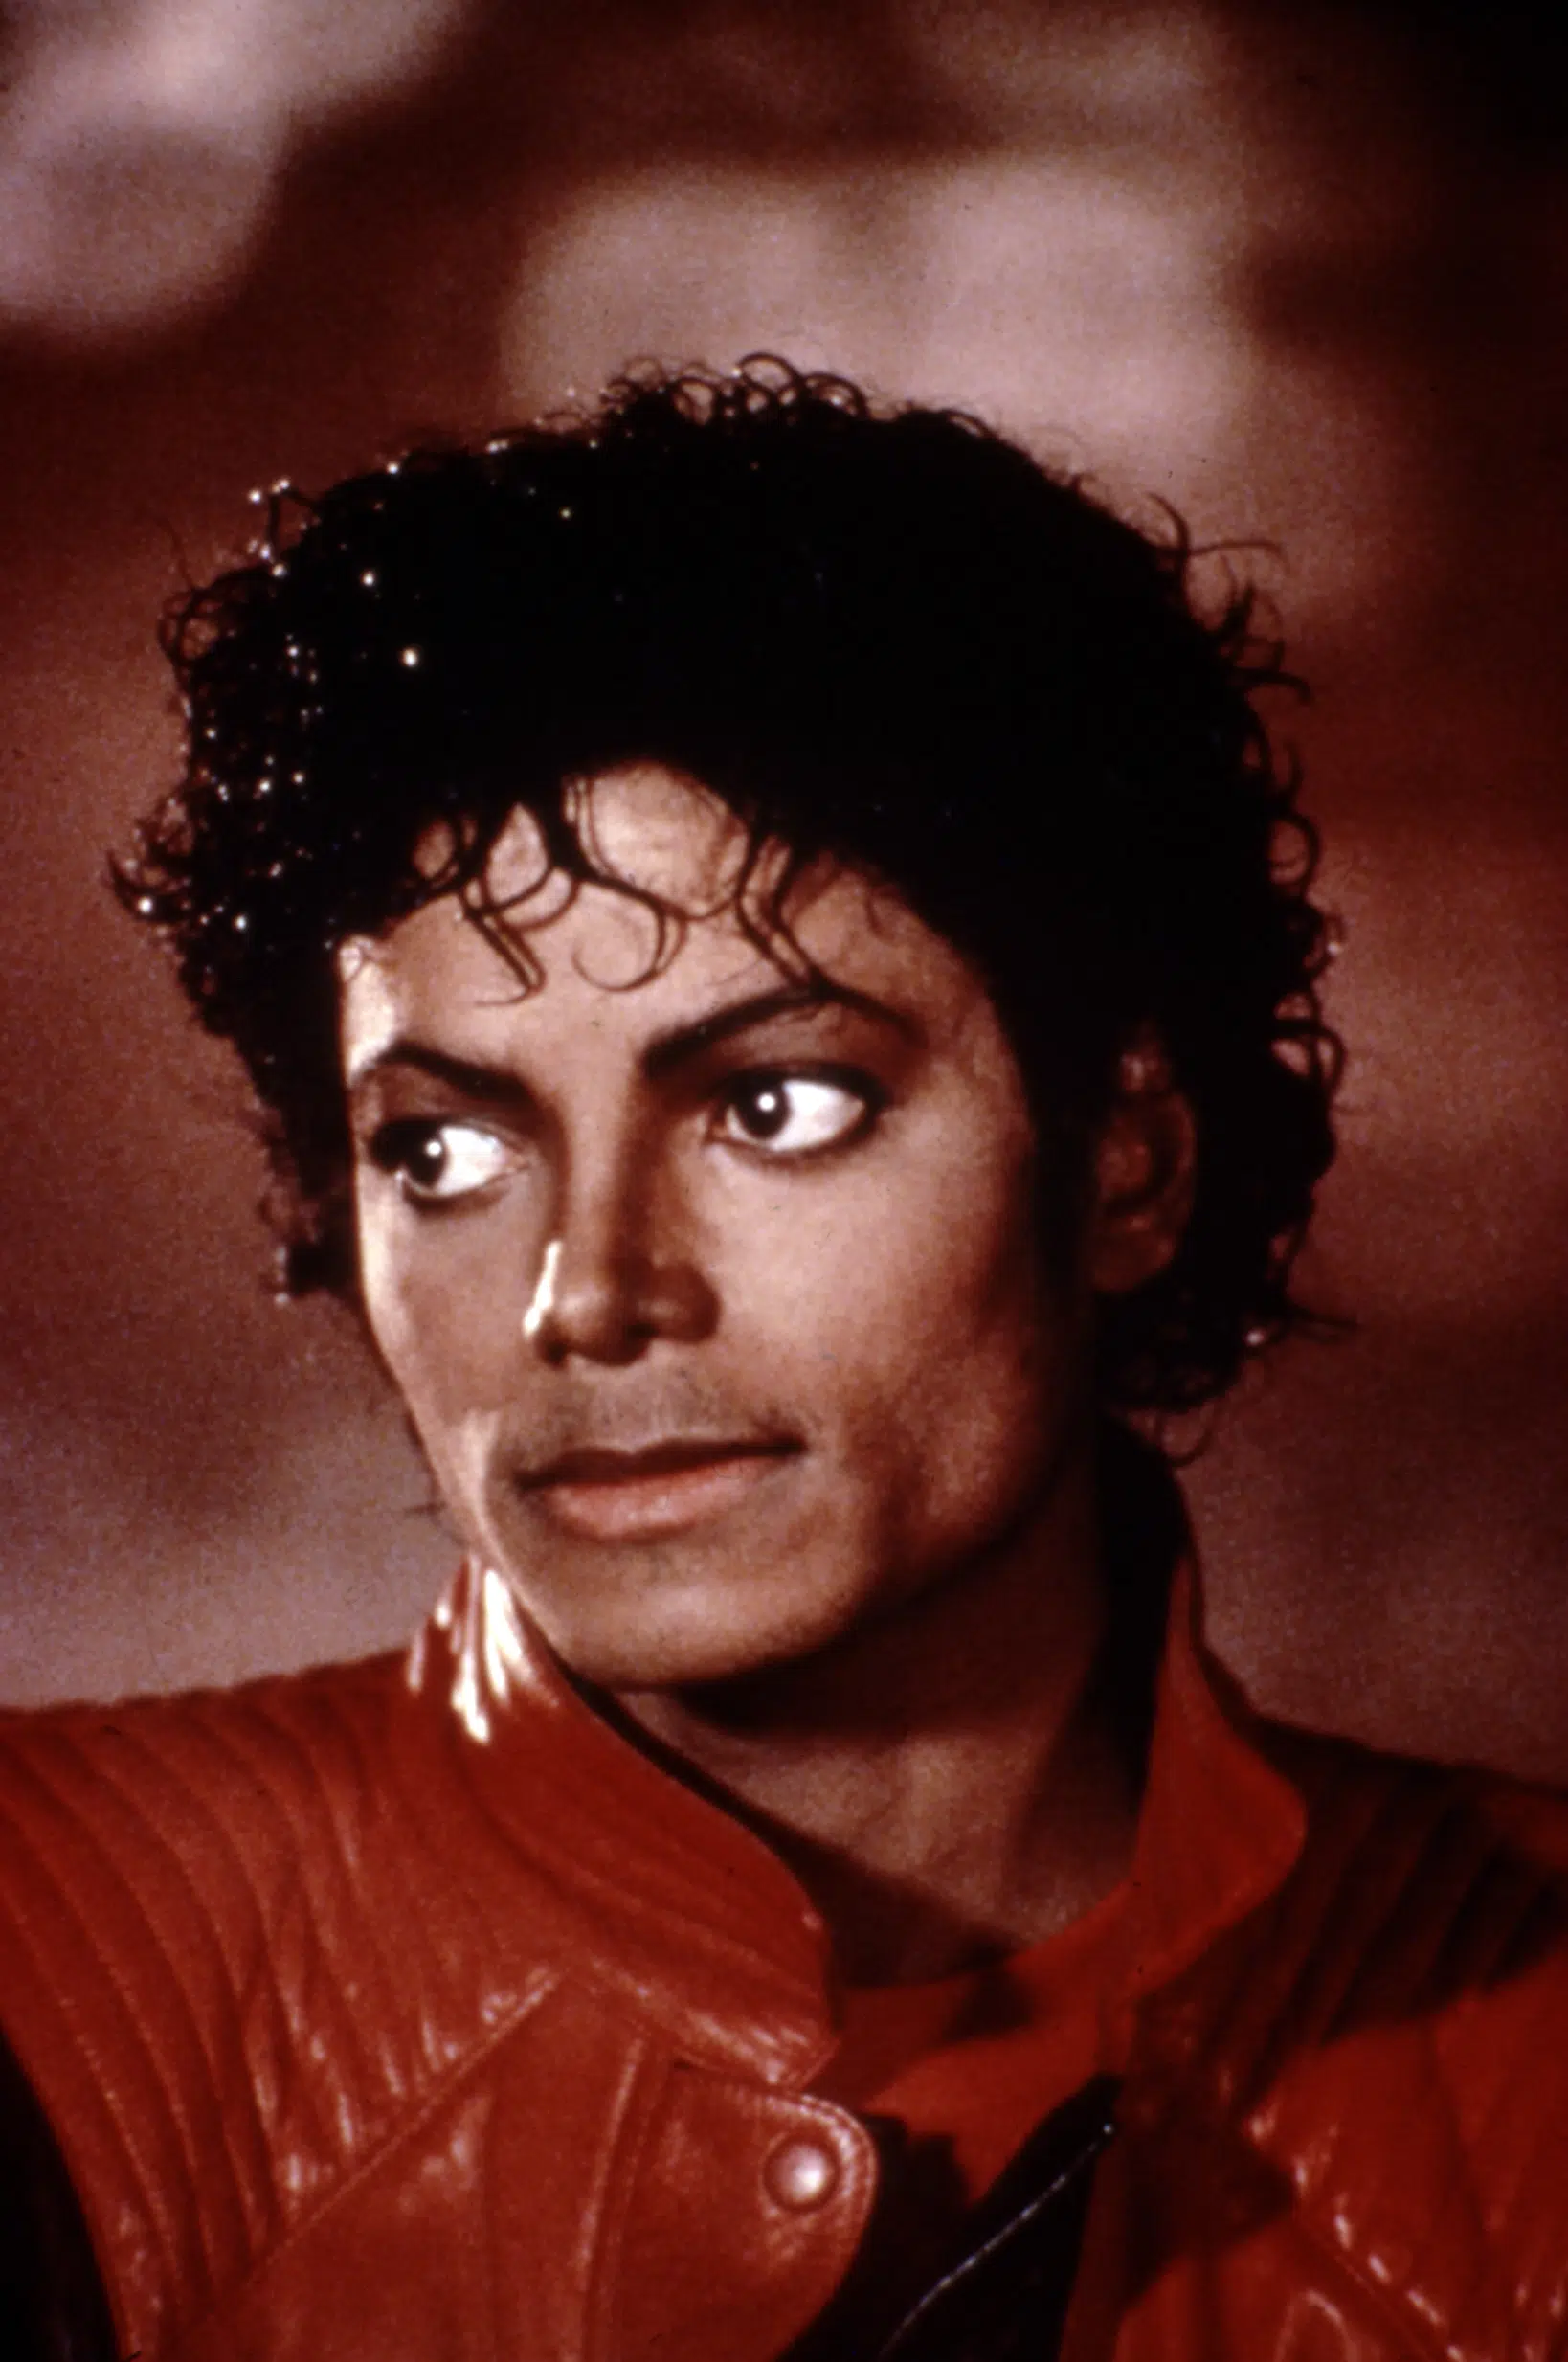 THRILLER, Michael Jackson, 1983